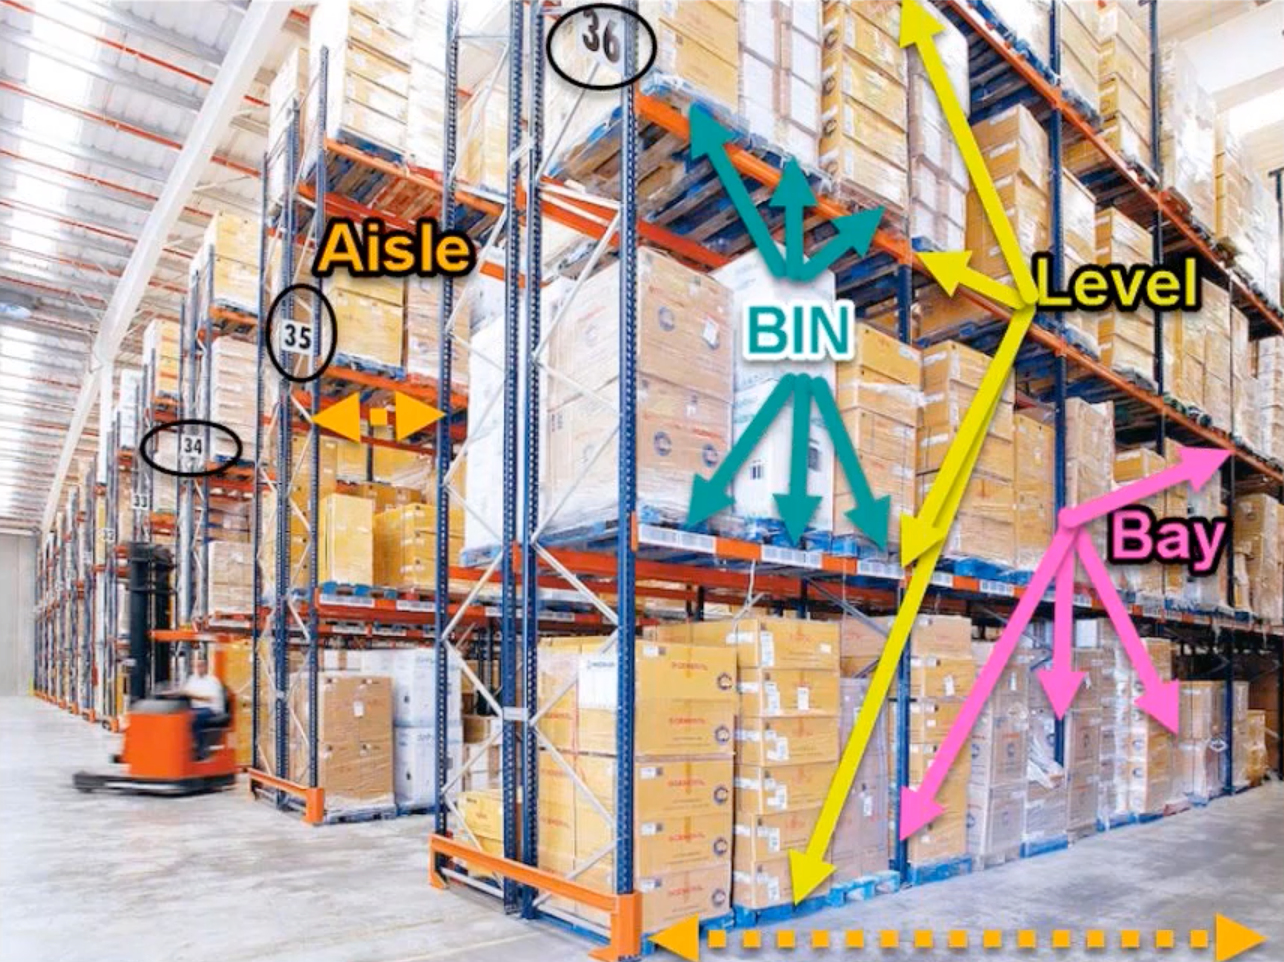 Woocommerce – Product Bin Location In Warehouse